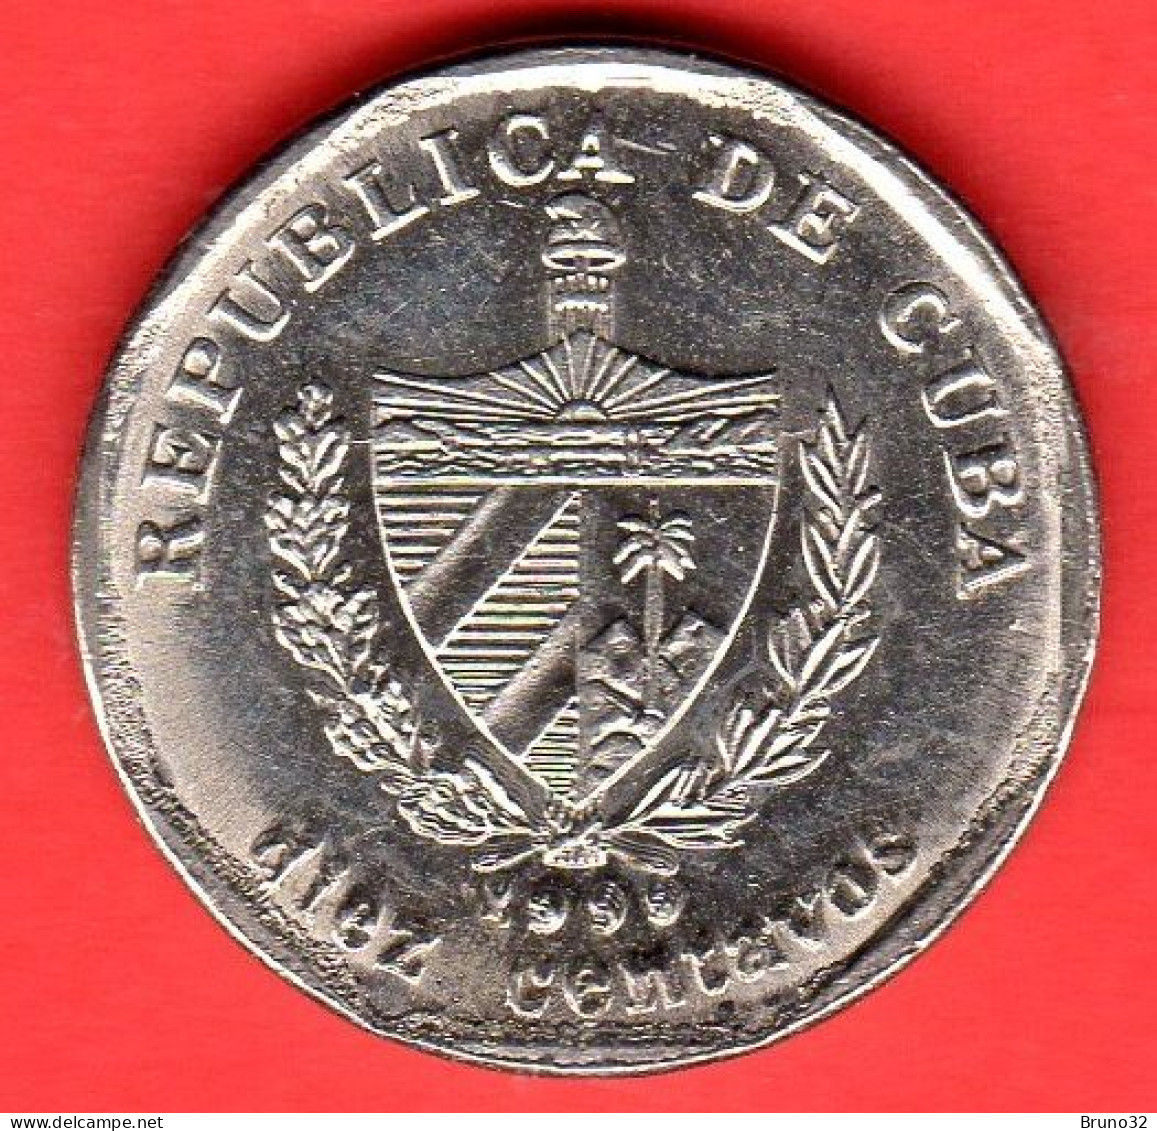 CUBA - 1999 - 10 Centavos - QFDC/aUNC - Come Da Foto - Cuba